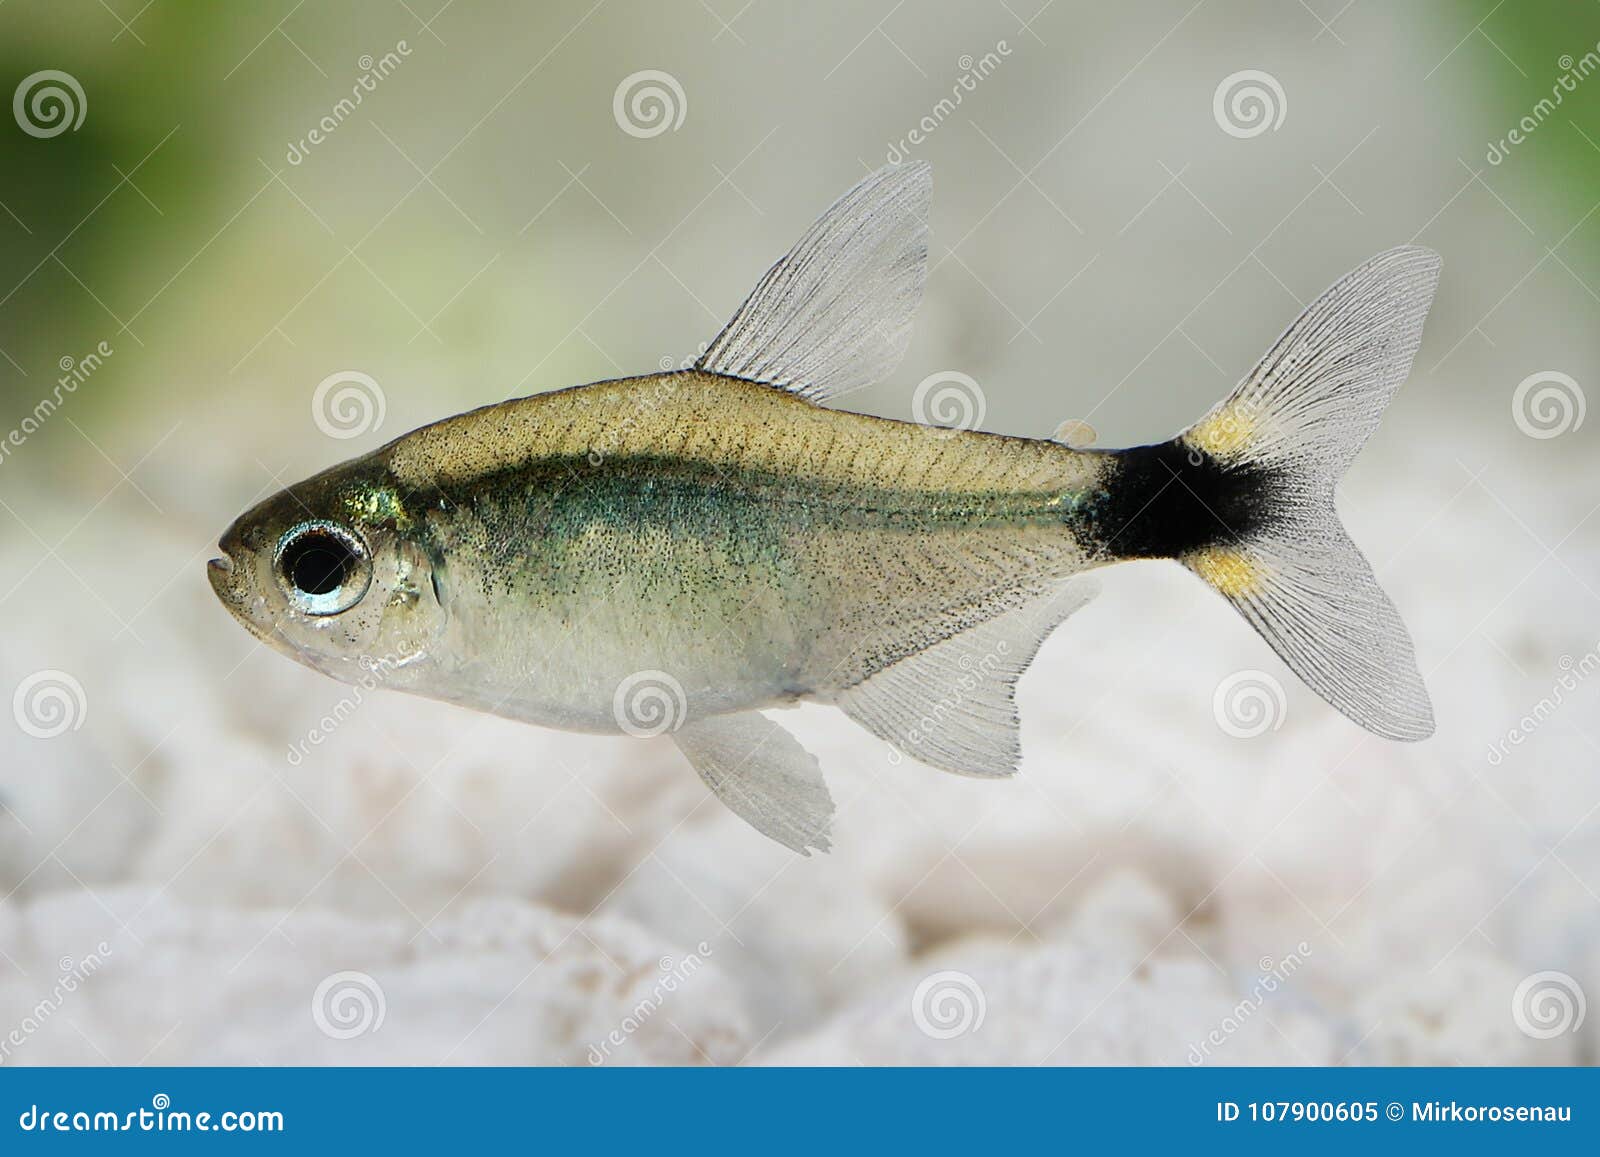 kitty tetra hyphessobrycon heliacus tropical aquarium fish